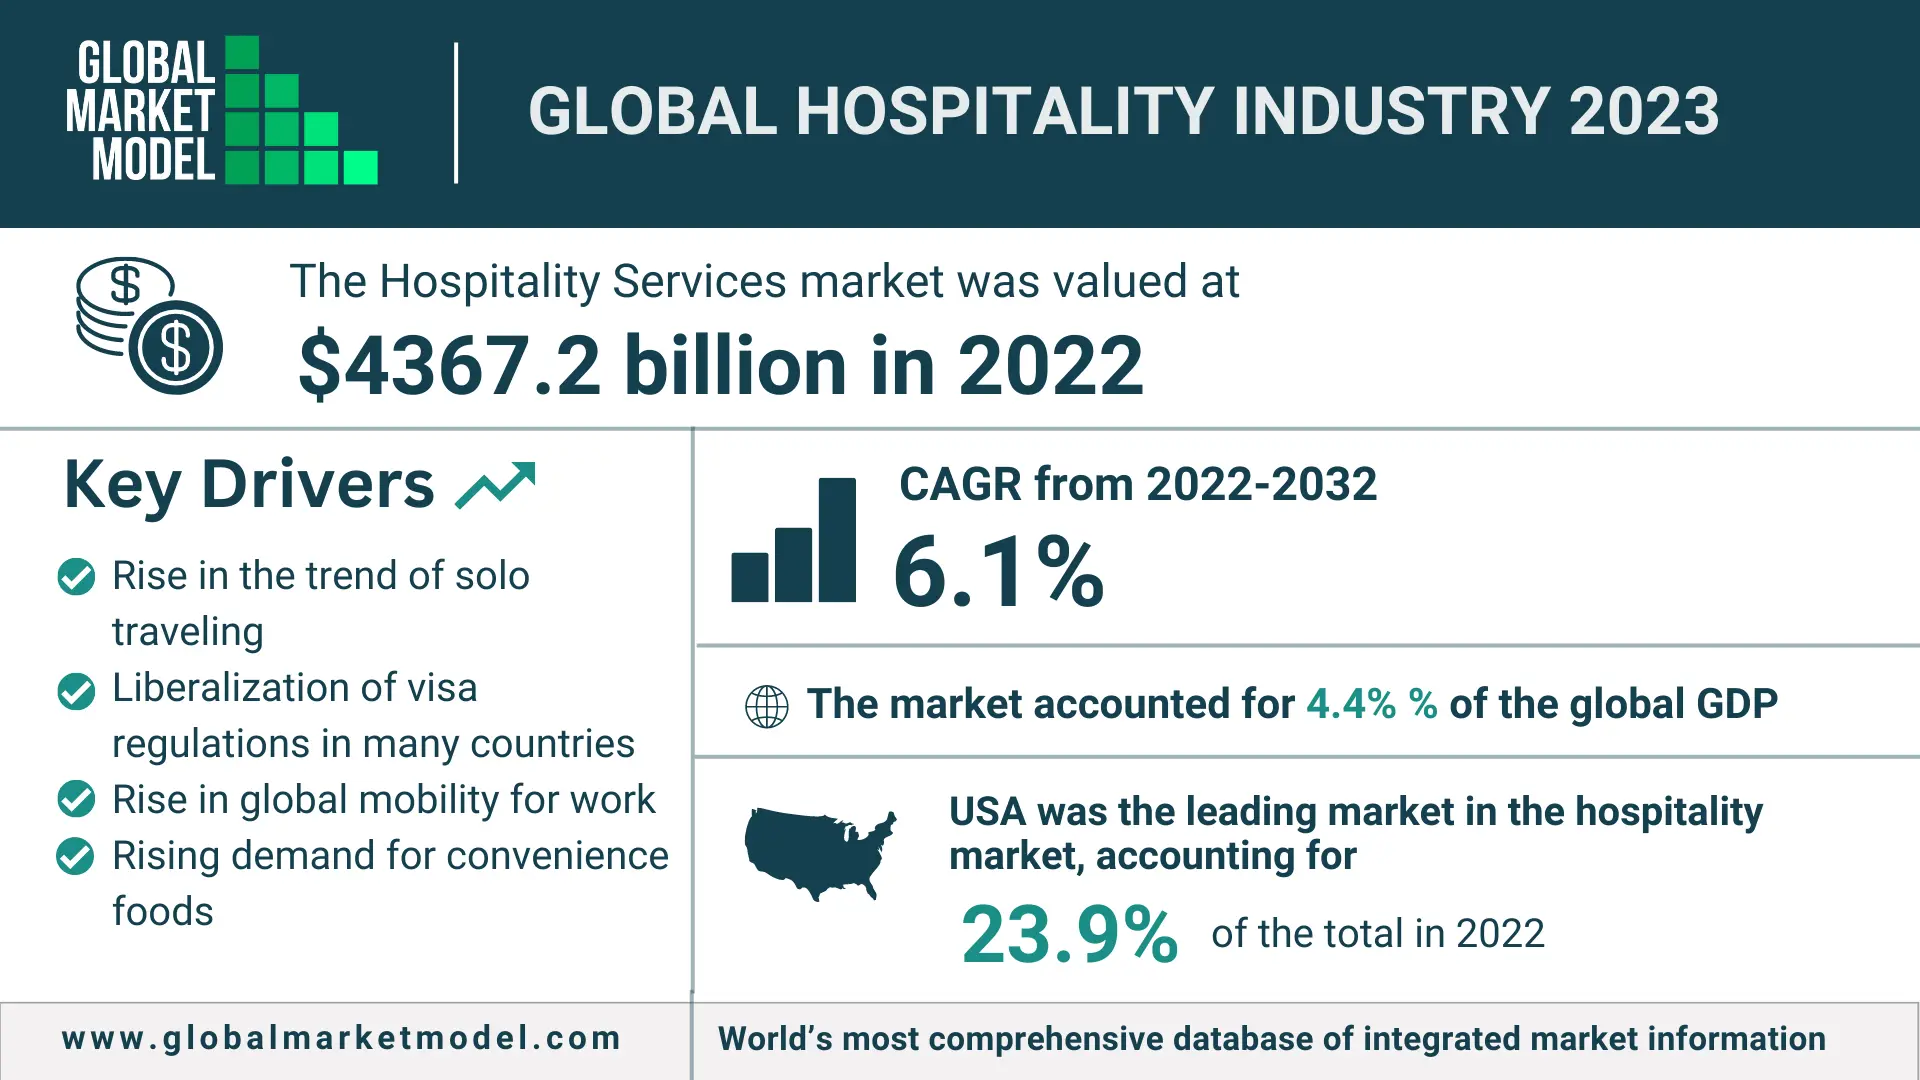 Global Hospitality Industry 2023